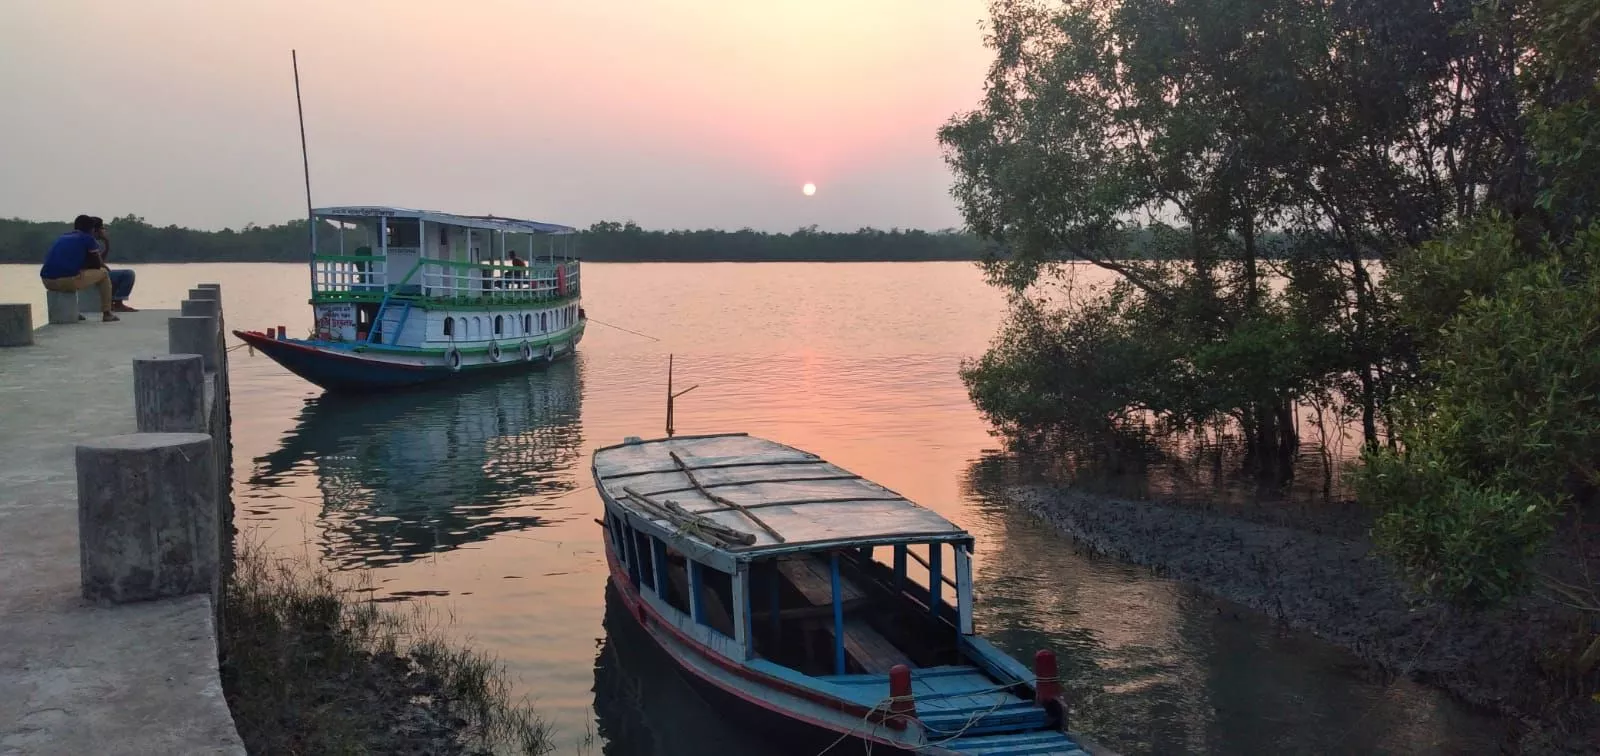 Sundarban Travel: Overview of Sundarban as a Travel Destination